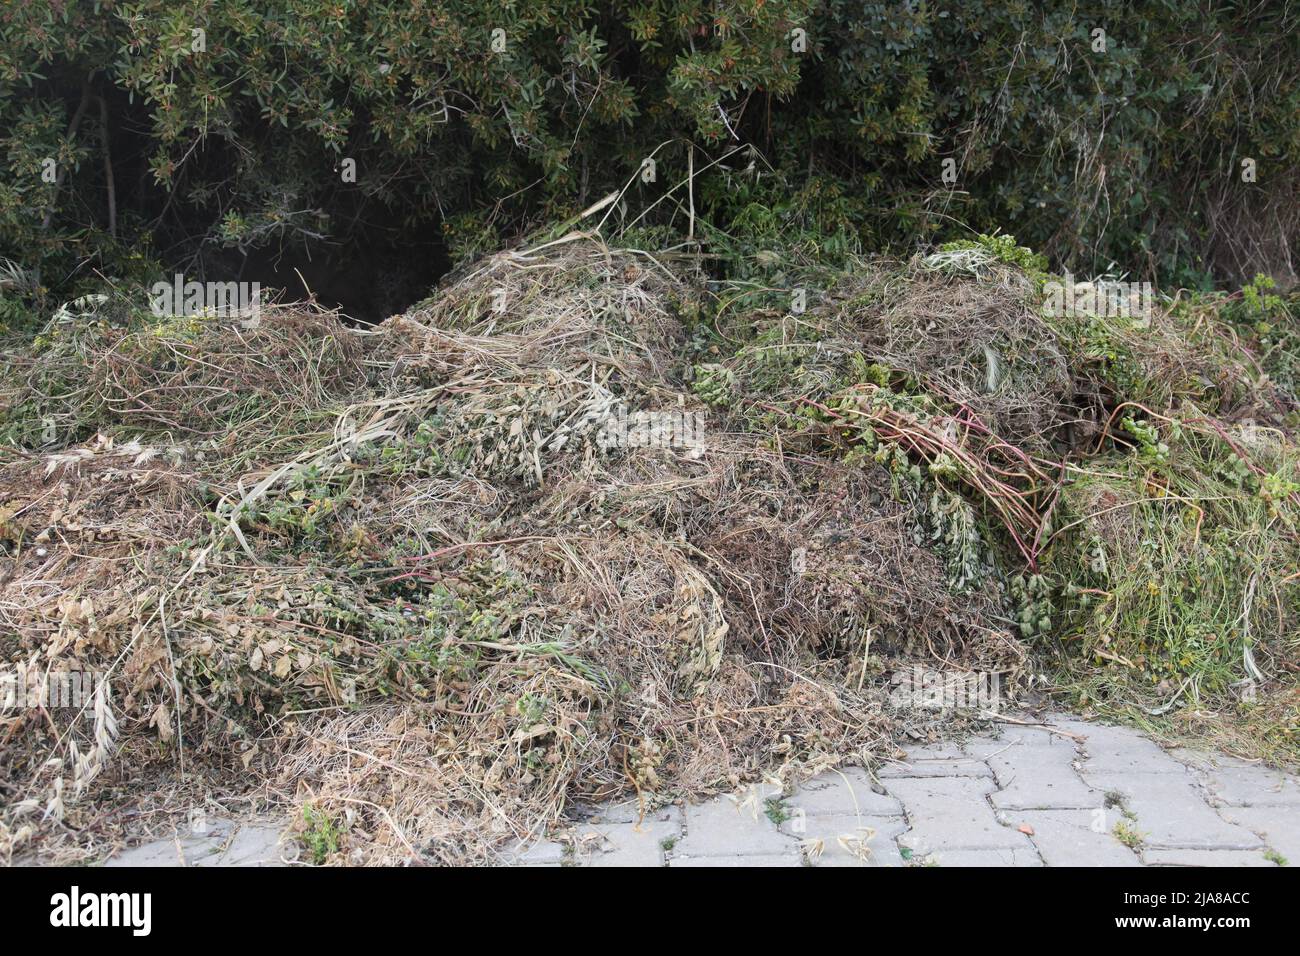 Pruning in the garden waste. Pile of garden waste. Stock Photo